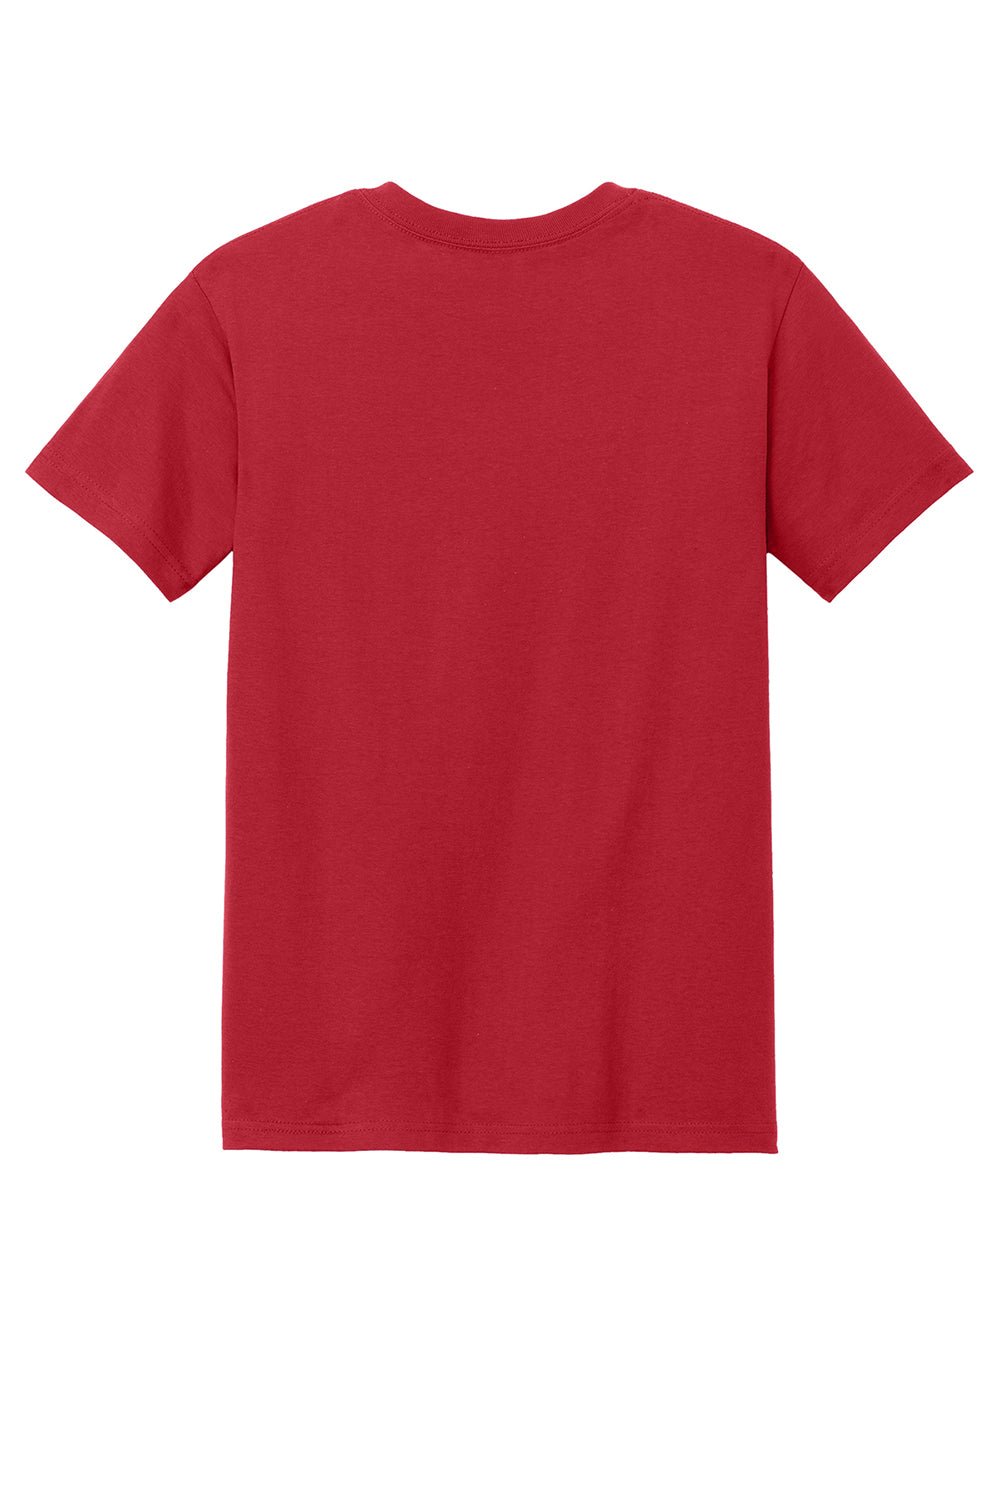 American Apparel 1301/AL1301 Mens Short Sleeve Crewneck T-Shirt Cardinal Red Flat Back